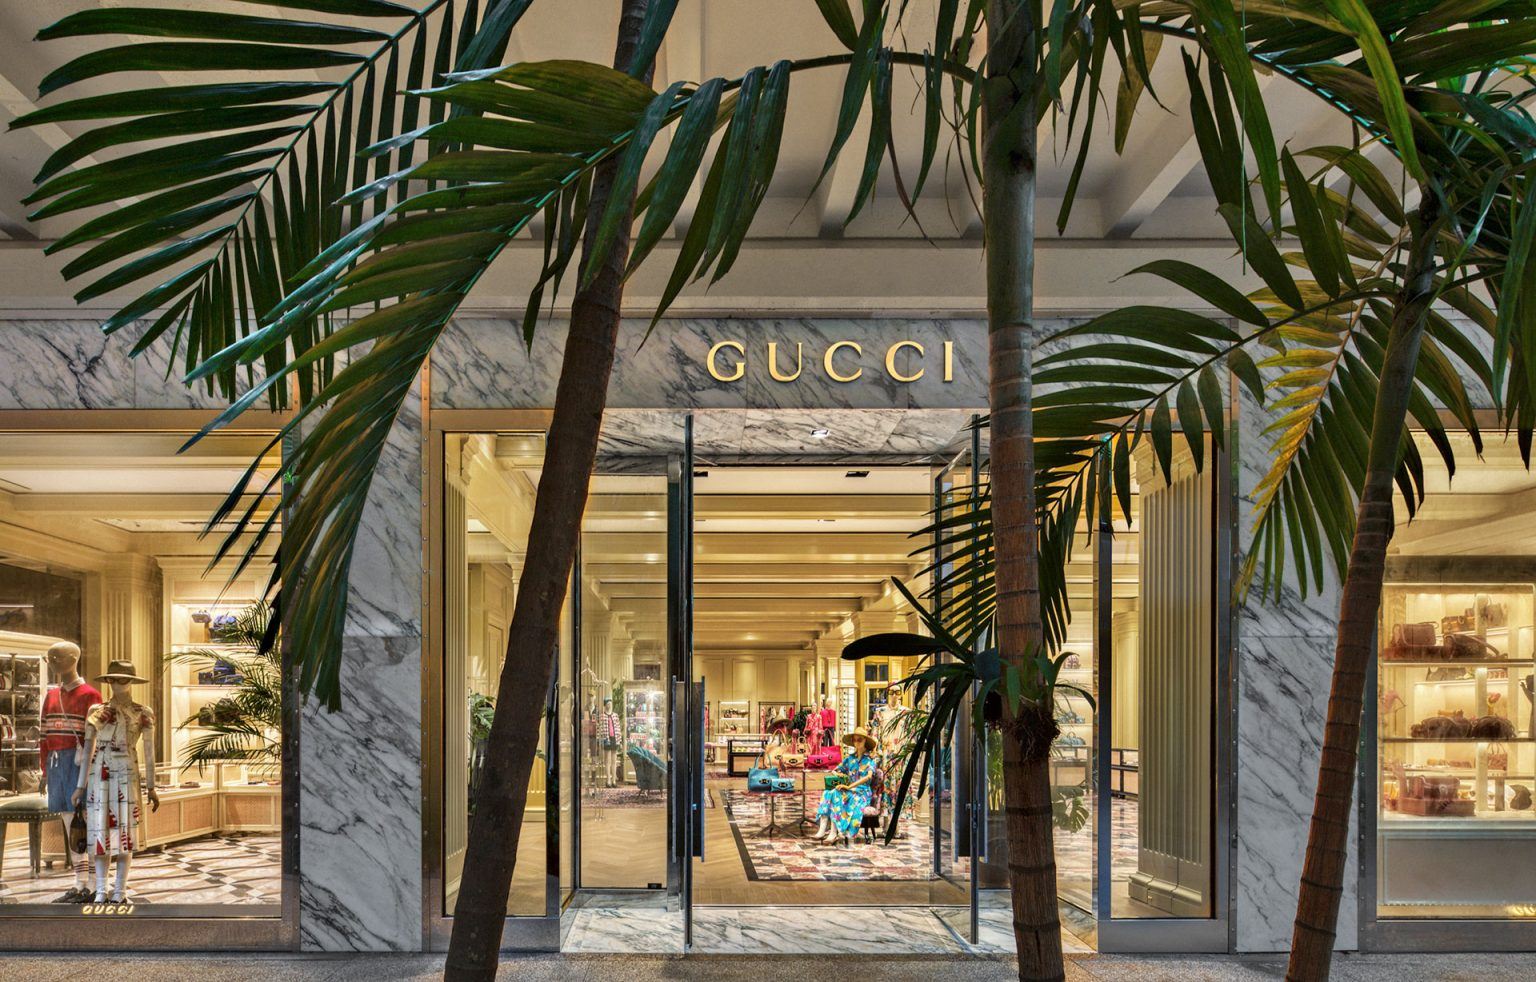 Gucci-Storefront-1 - Bal Harbour Shops